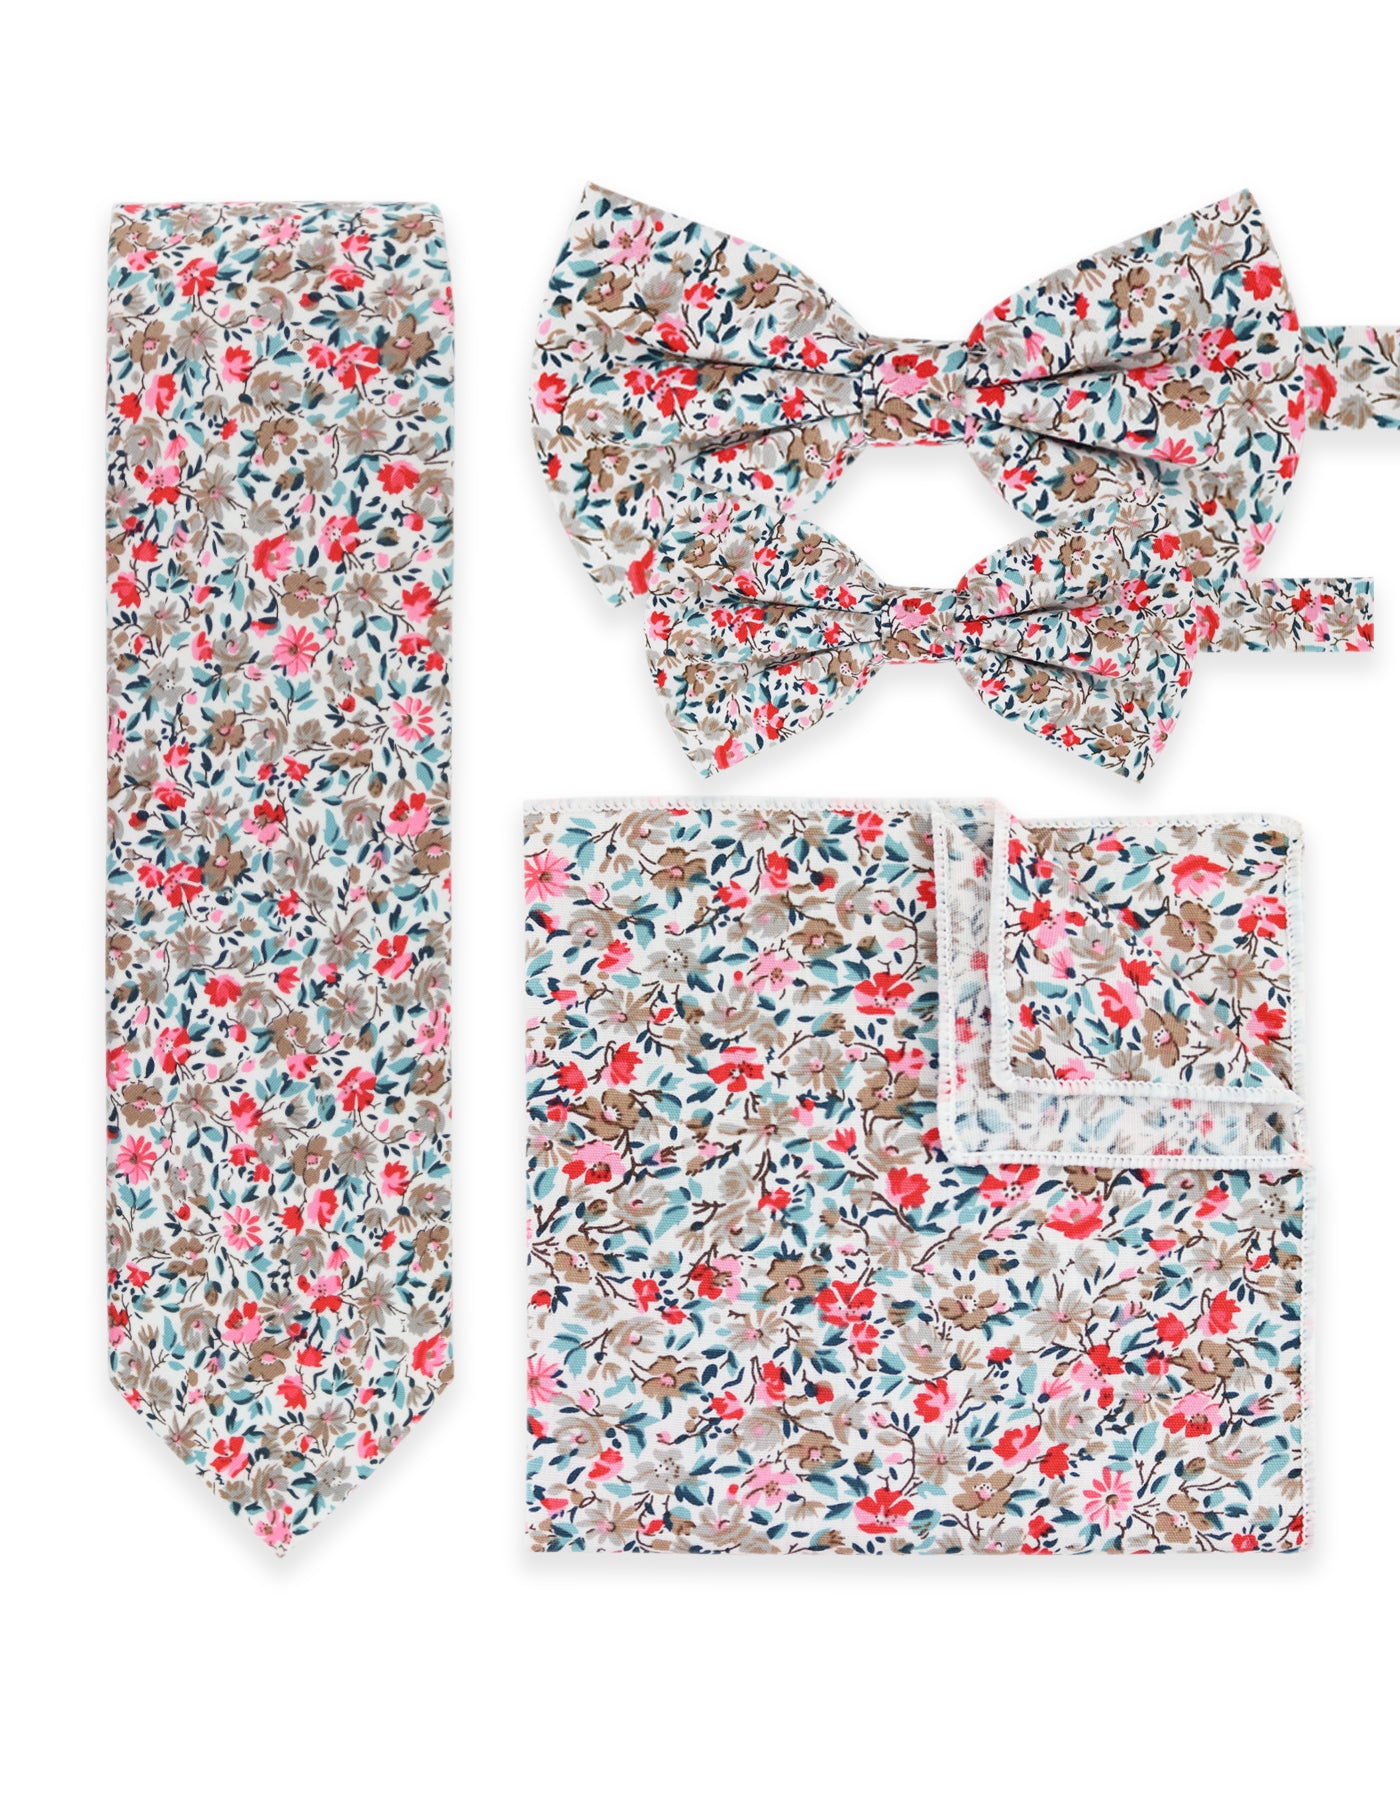 100% Cotton Floral Print Tie - Red & Blue